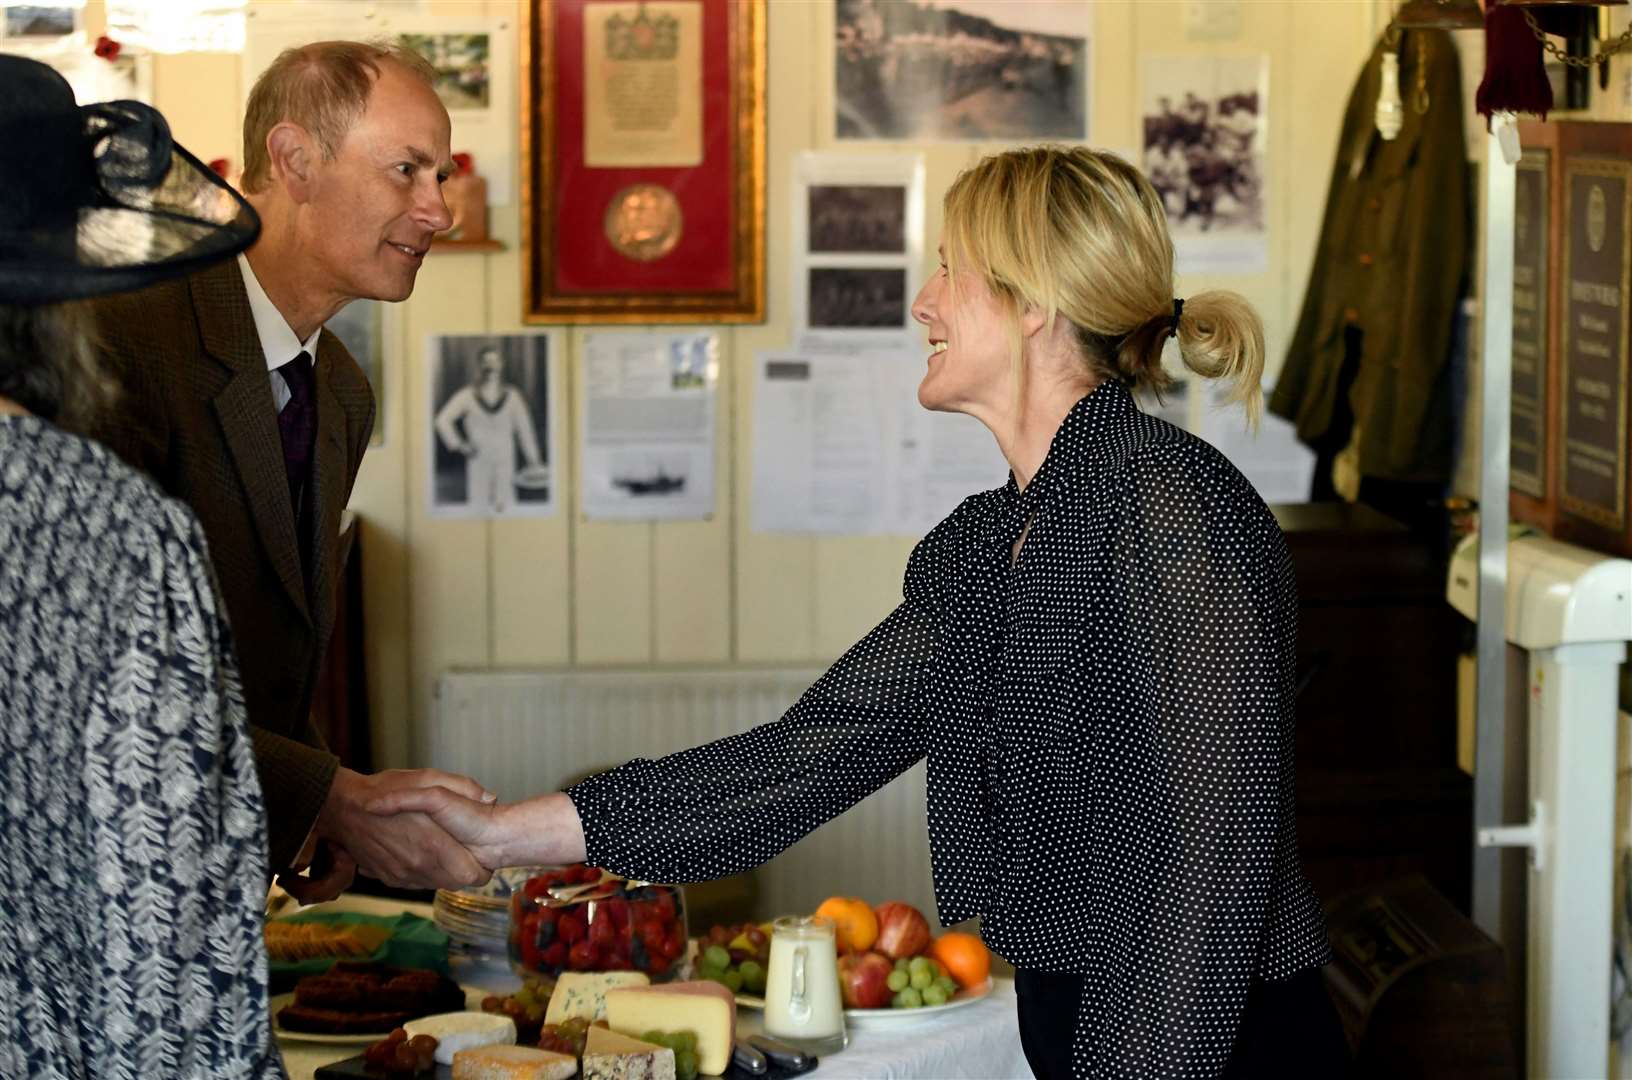 The Duke of Edinburgh meets Jacqui Oglesby.Picture: James Mackenzie